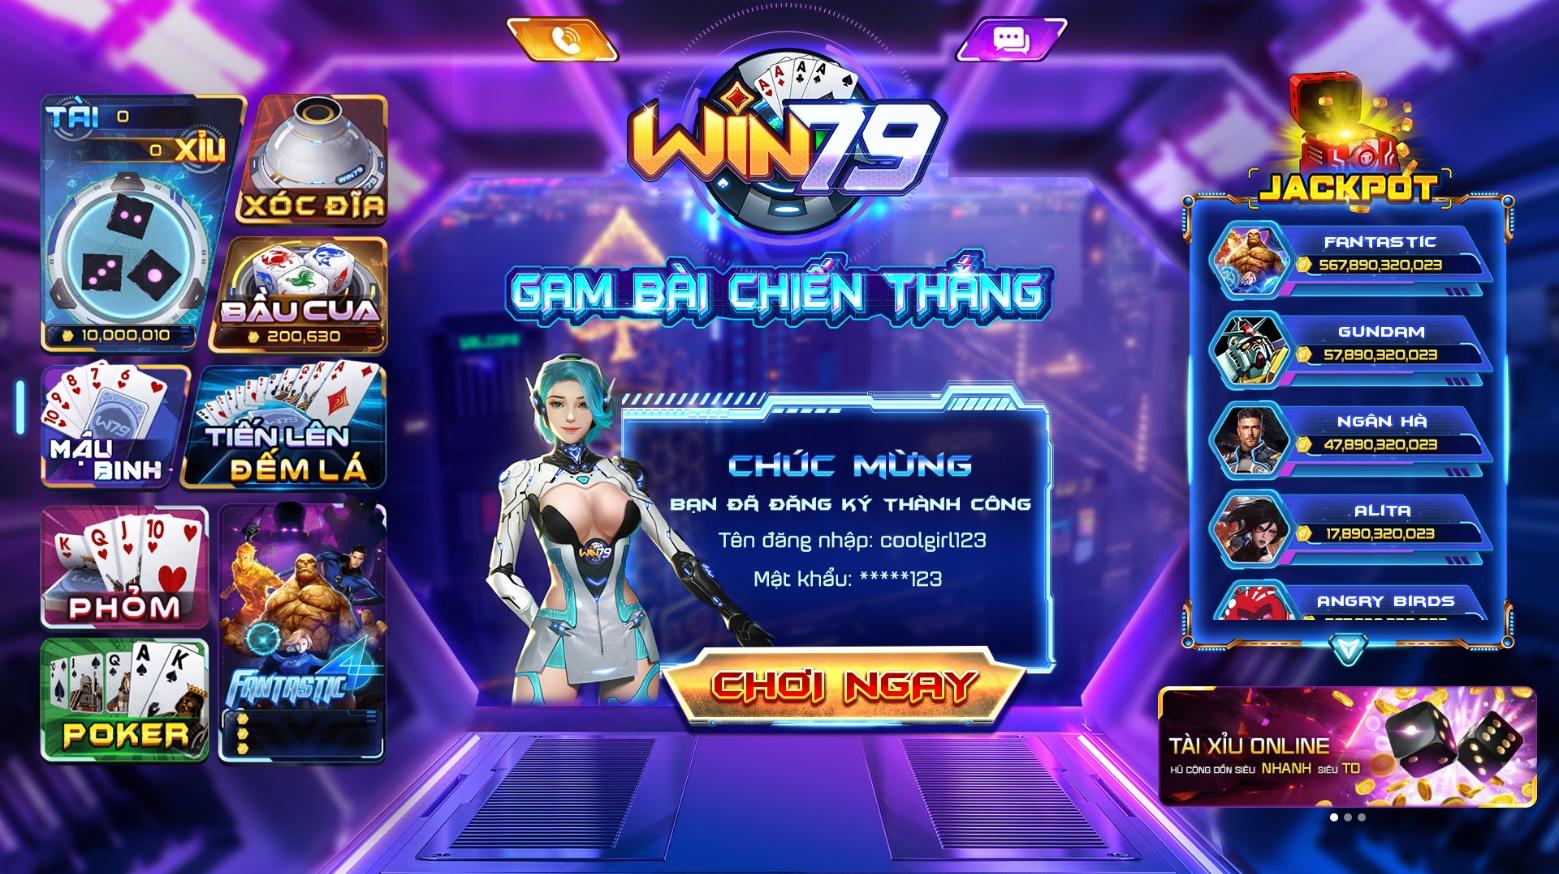 Hướng dẫn tham gia game giải trí hấp dẫn Mini Poker tại Win79